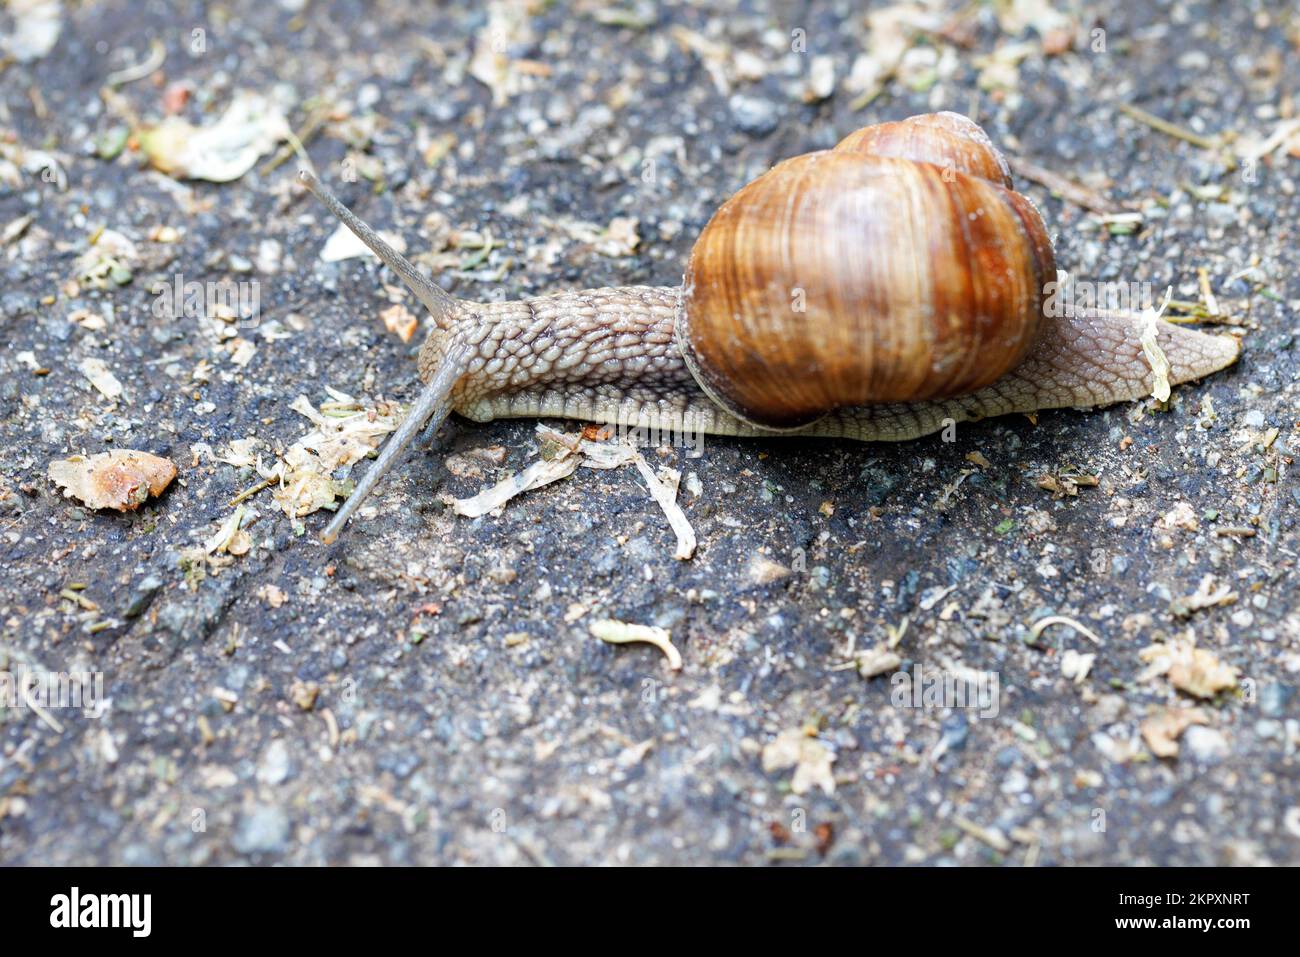 A large snail crawls along an asphalt path in a light blur. Closeup, copy space. Stock Photo